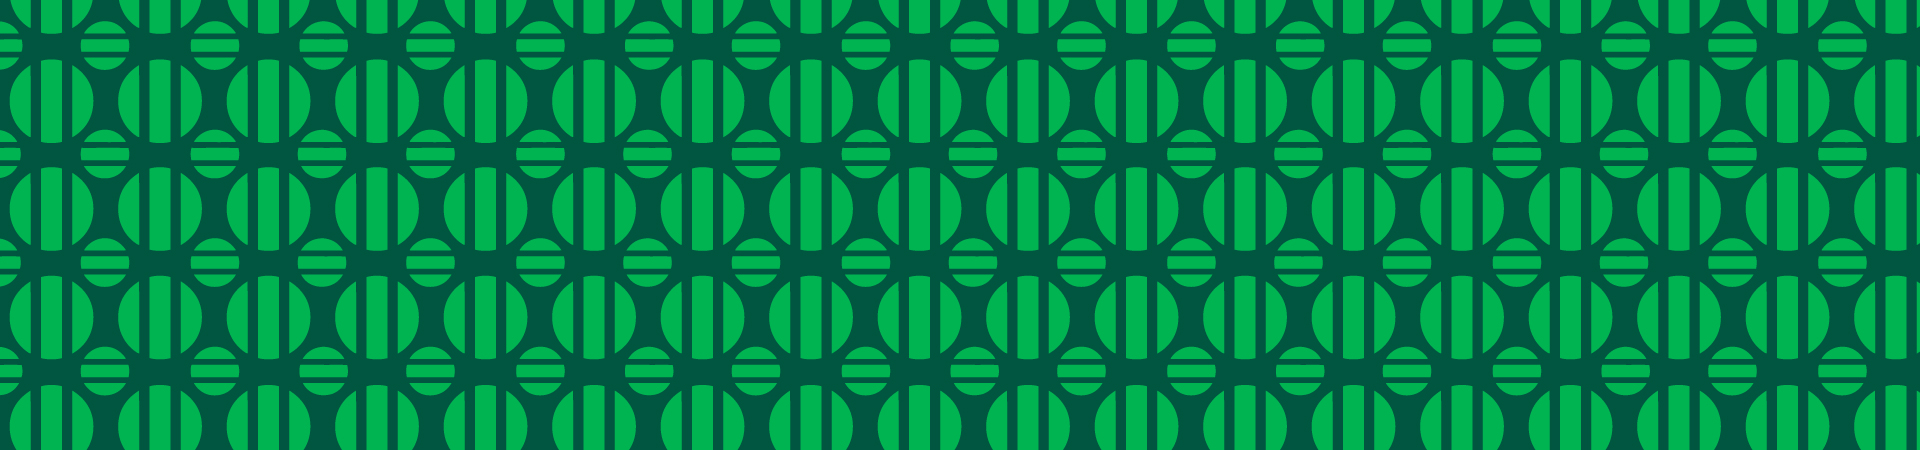  Decorative green patterned banner image. 